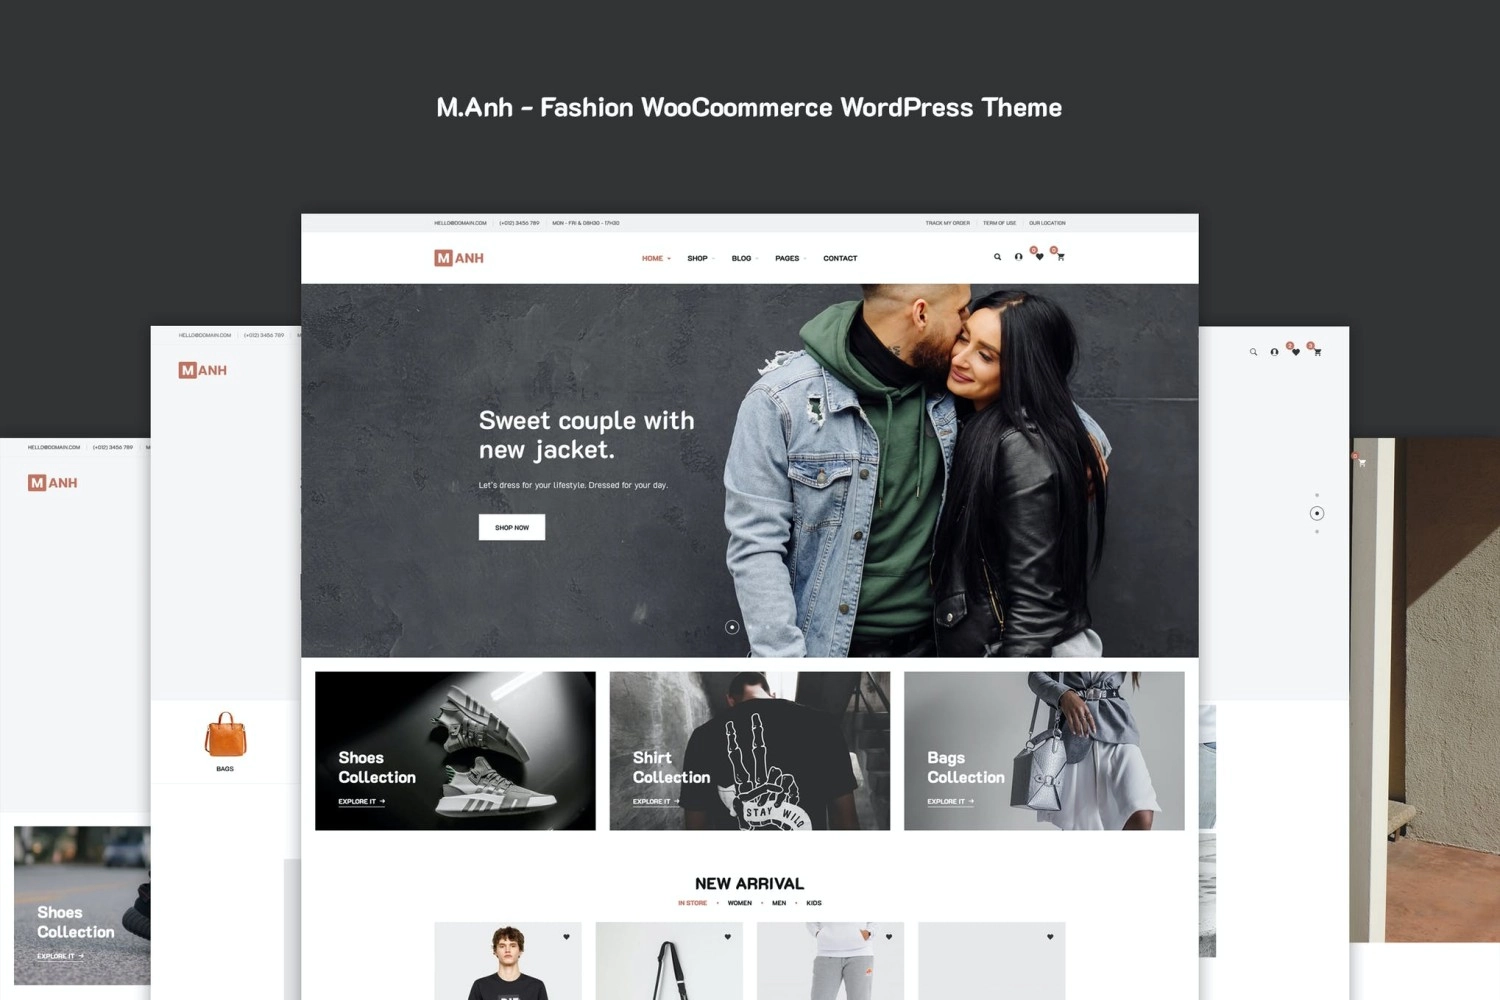 M.anh Fashion Woocoommerce Wordpress Theme 1.0